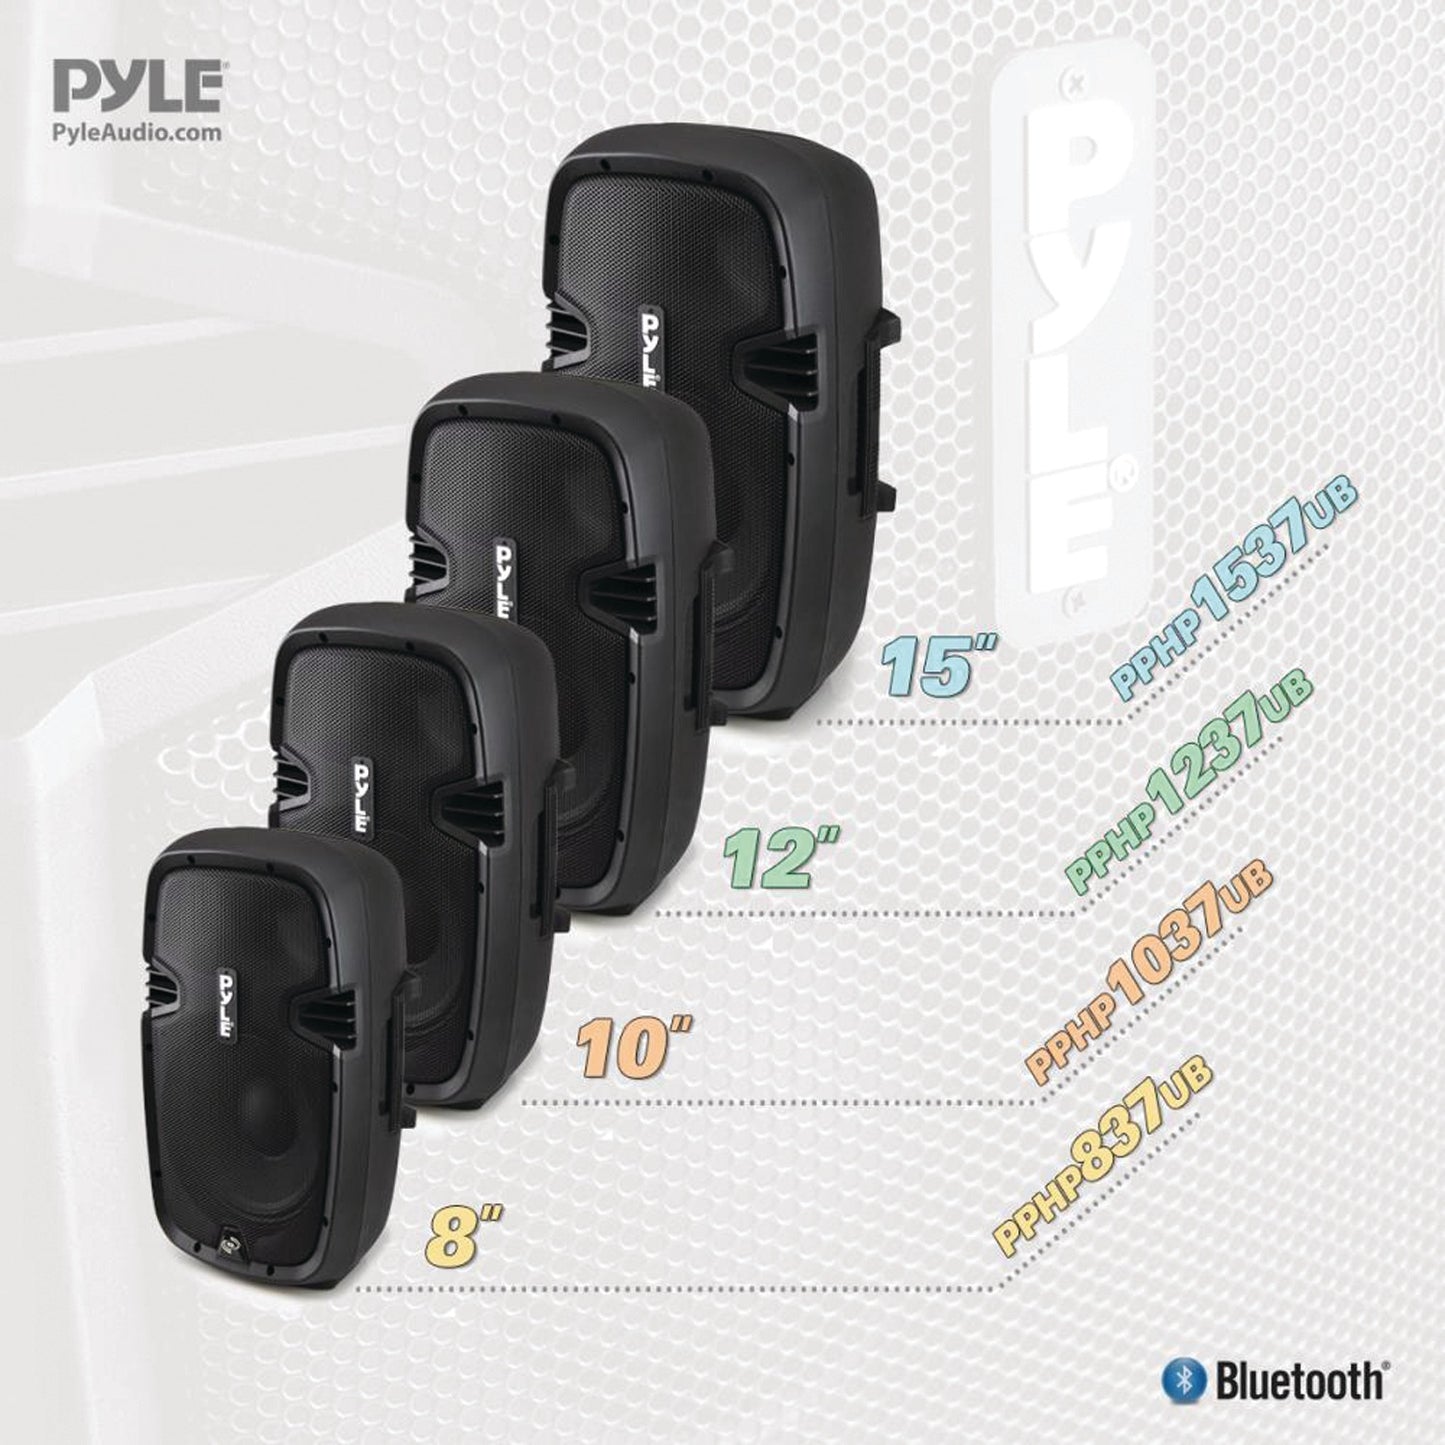 Pyle PPHP837UB Bluetooth Loudspeaker PA System